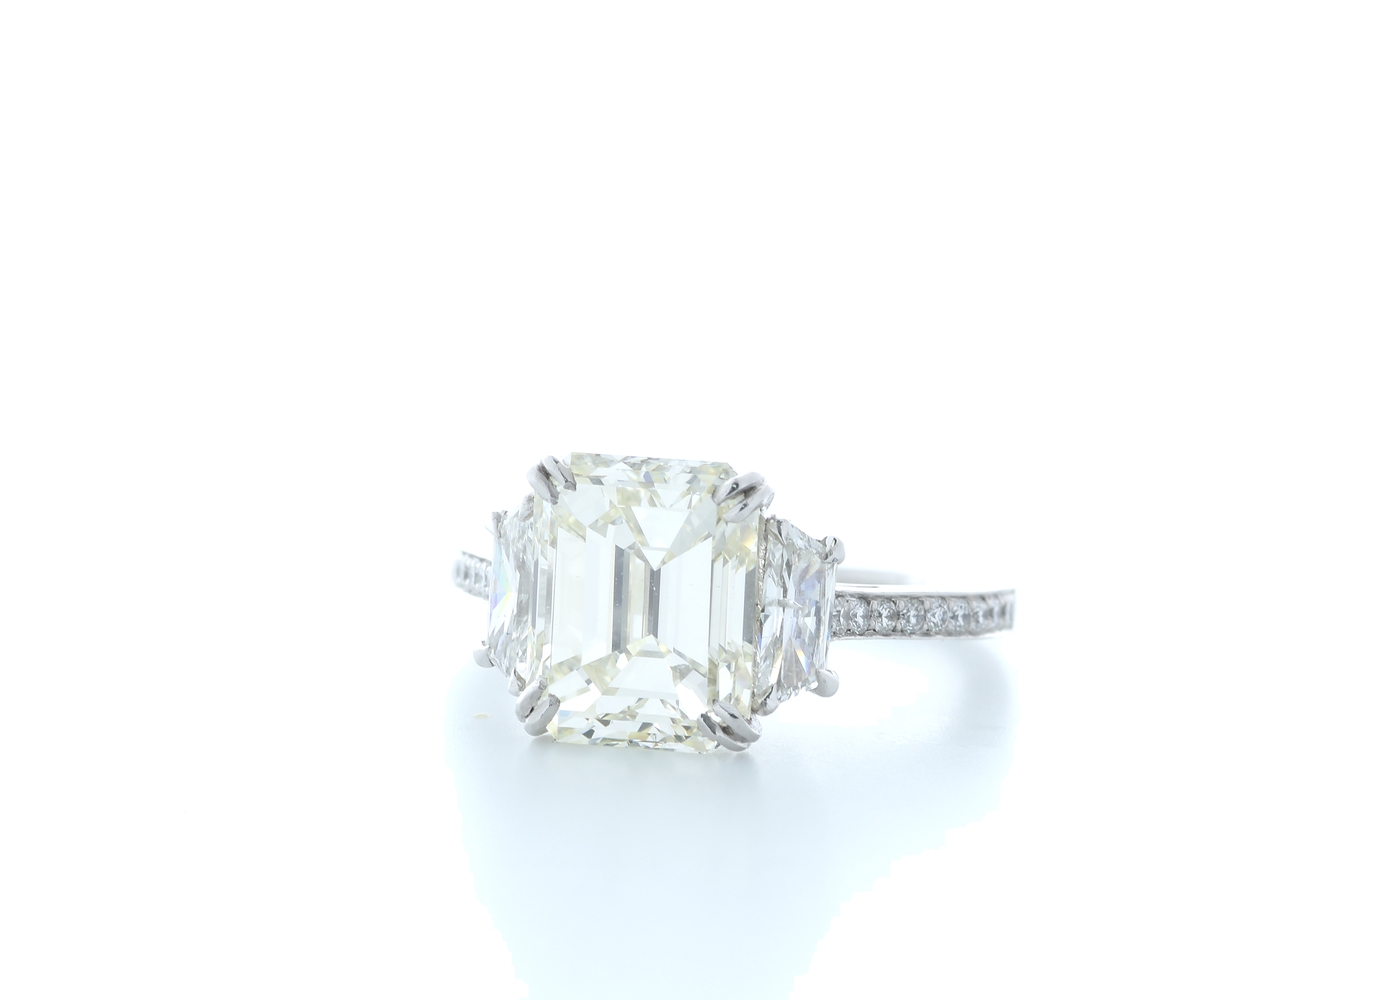 18ct White Gold Emerald Cut Diamond Ring 5.31 (4.56) Carats - Image 2 of 5